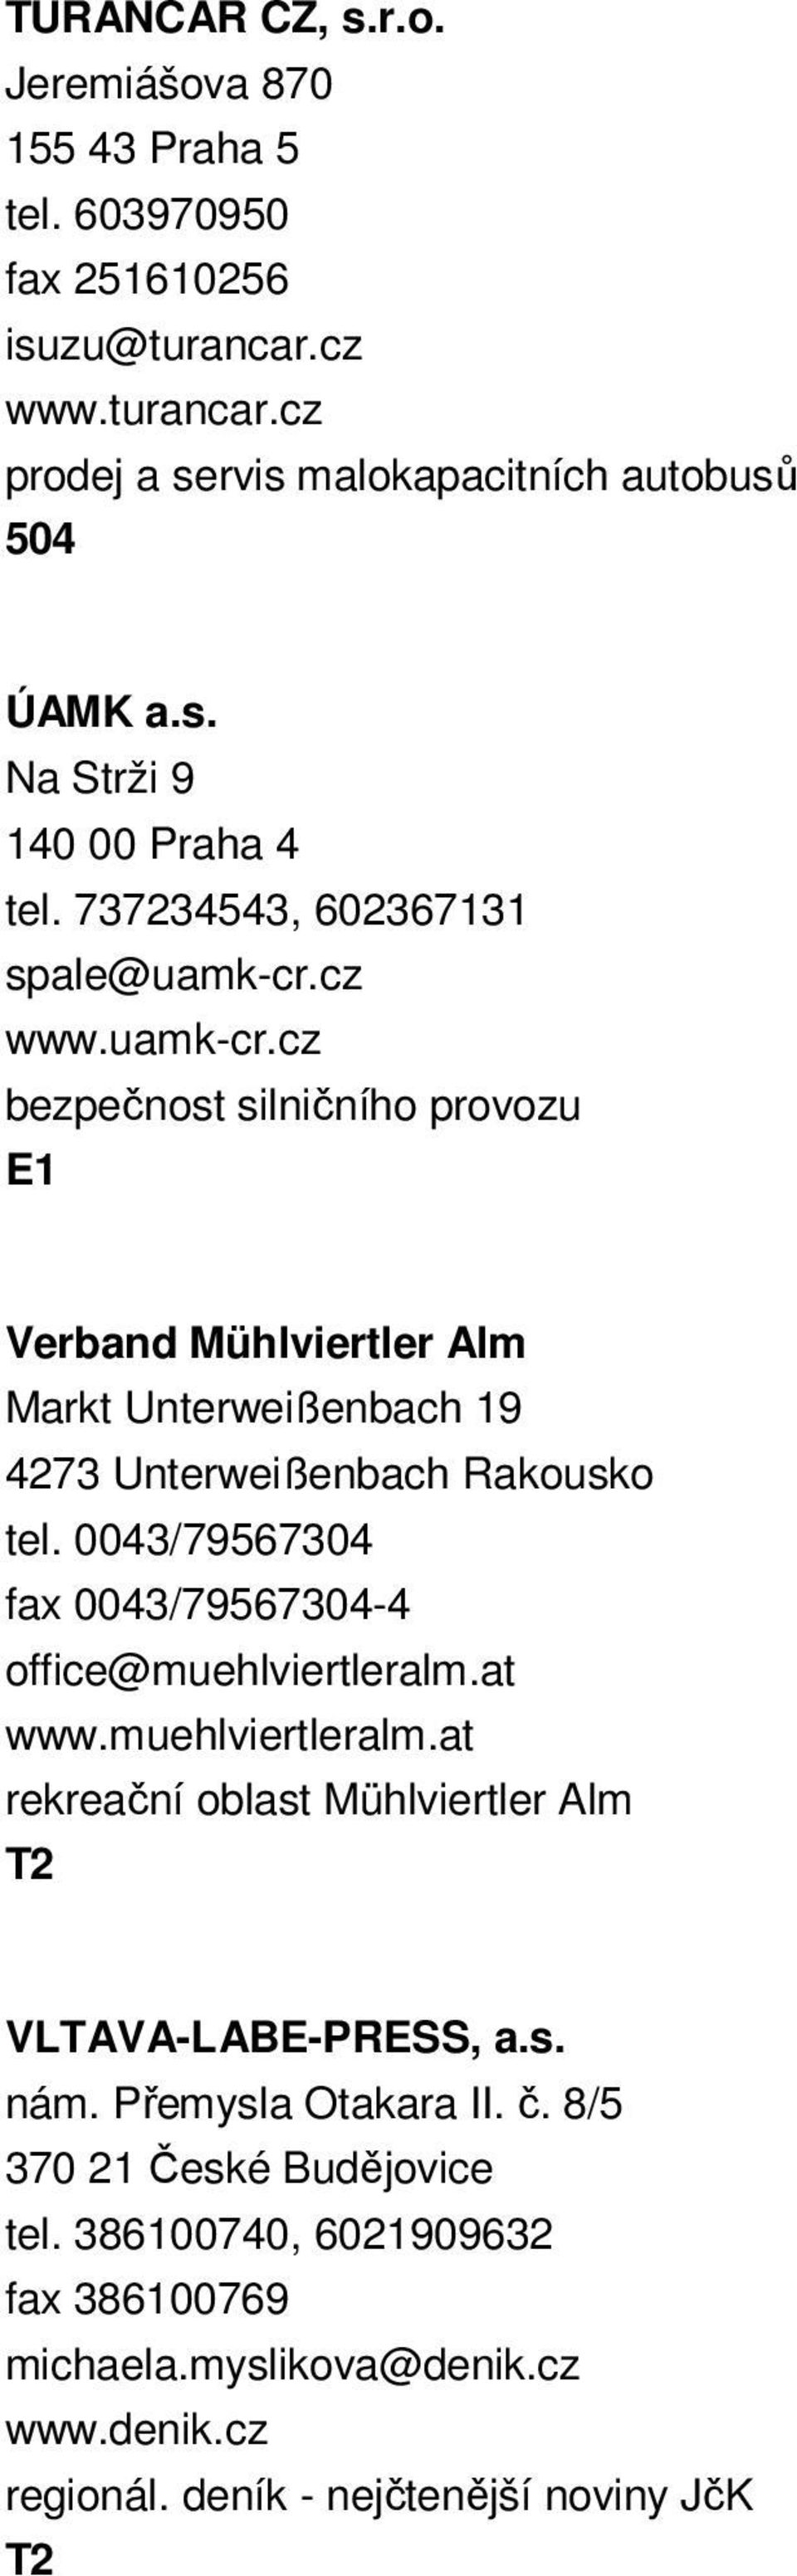 0043/79567304 fax 0043/79567304-4 office@muehlviertleralm.at www.muehlviertleralm.at rekreační oblast Mühlviertler Alm VLTAVA-LABE-PRESS, a.s. nám. Přemysla Otakara II. č.